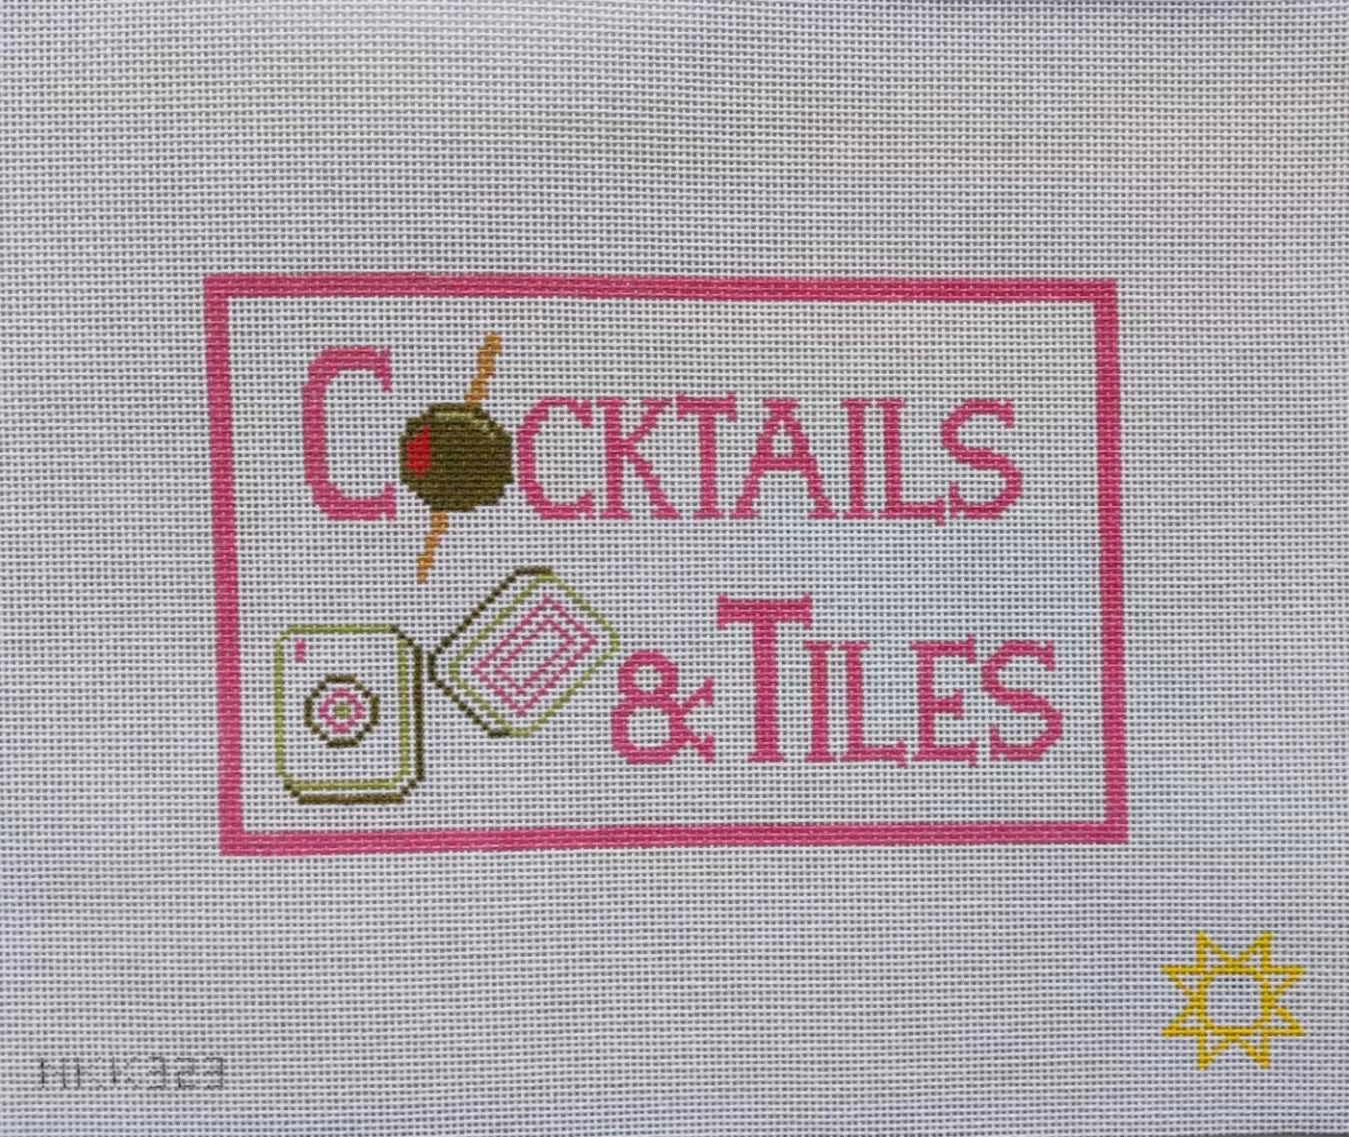 Cocktails & Tiles NKK323